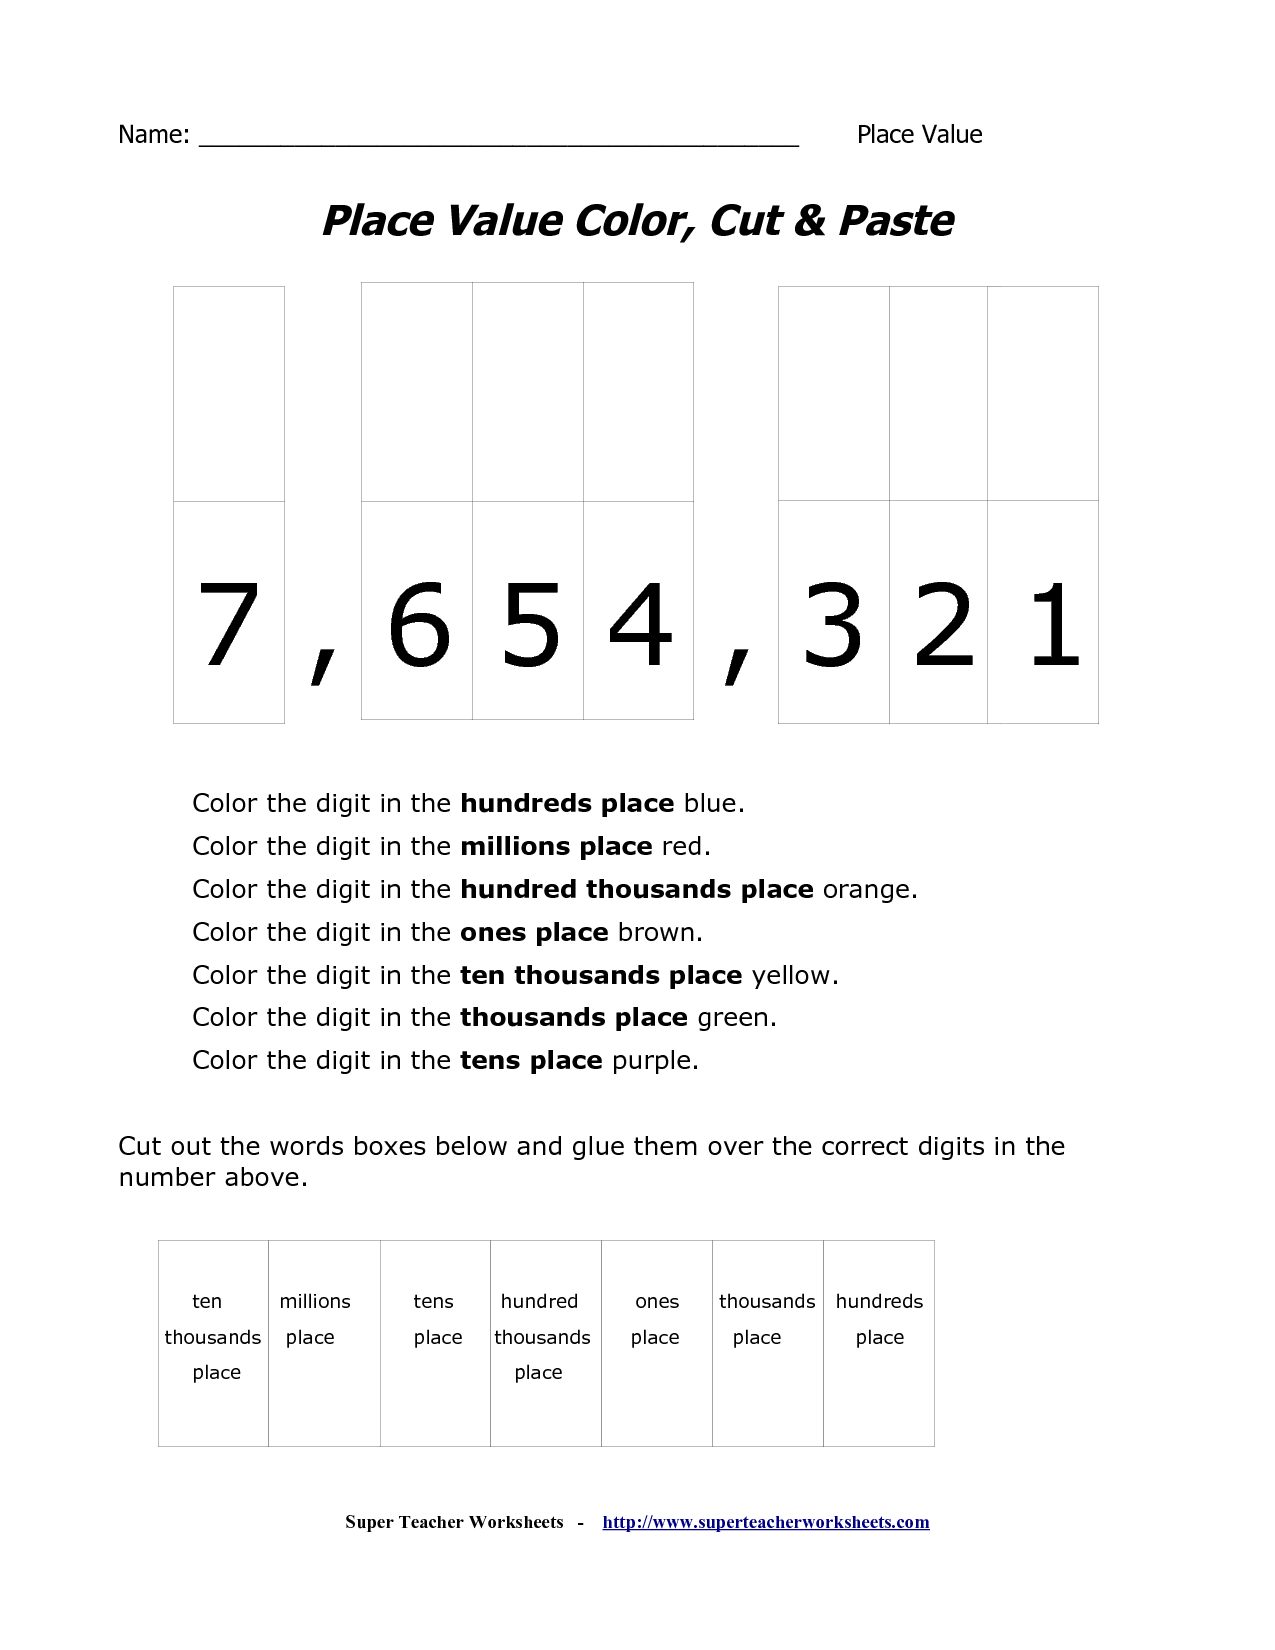 Place Value Color Cut and Paste Image